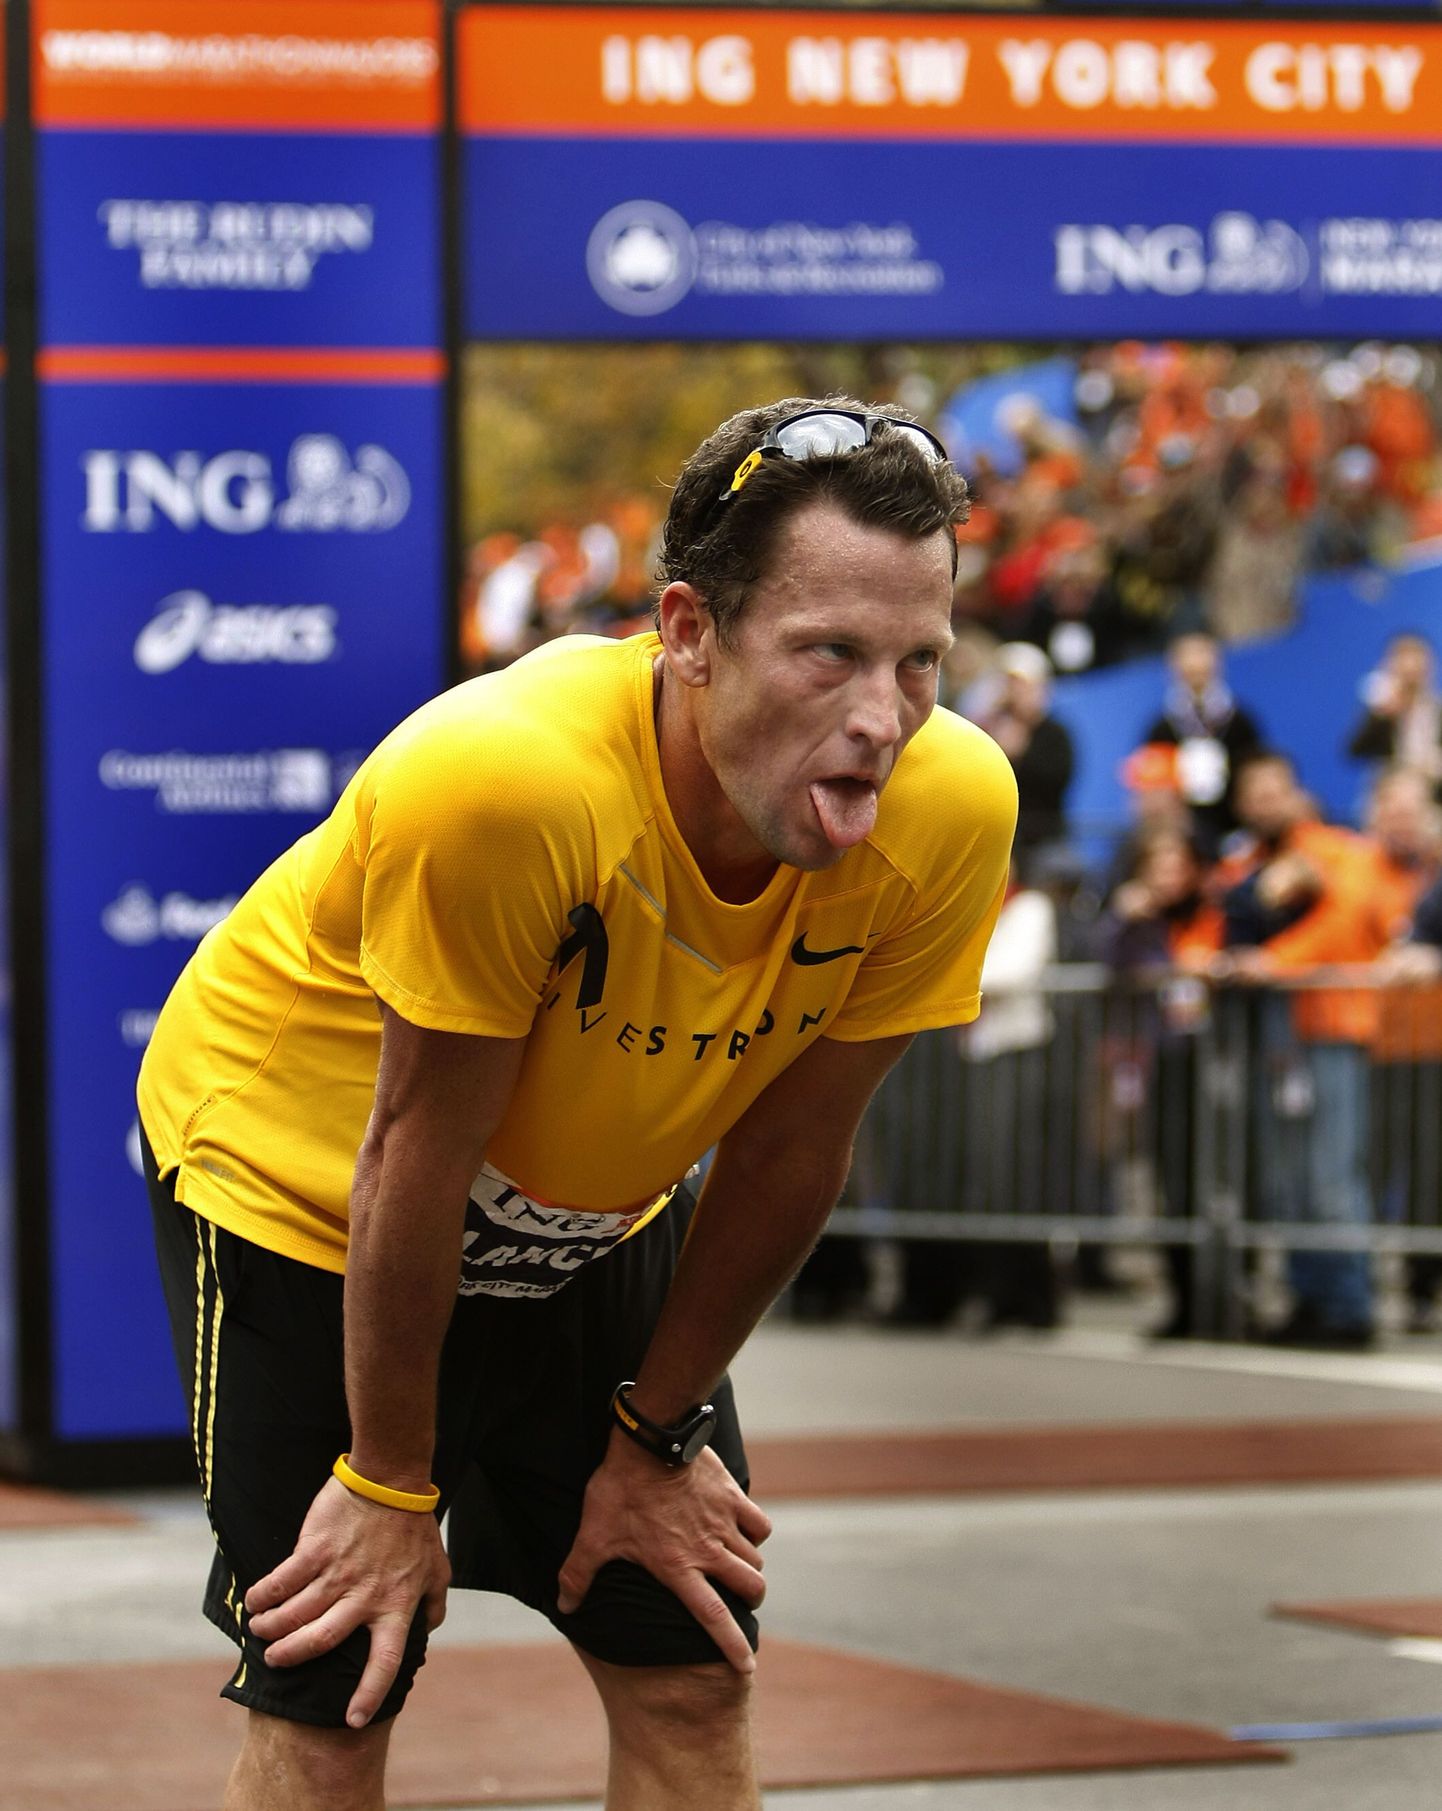 Lance Armstrong 4. novembril 2007, pärast New Yorgi maratoni finišijoone ületamist
his tongue out as he crosses the finish line of the New York City Marathon in New York 04 November 2007.         AFP PHOTO/Timothy A. CLARY